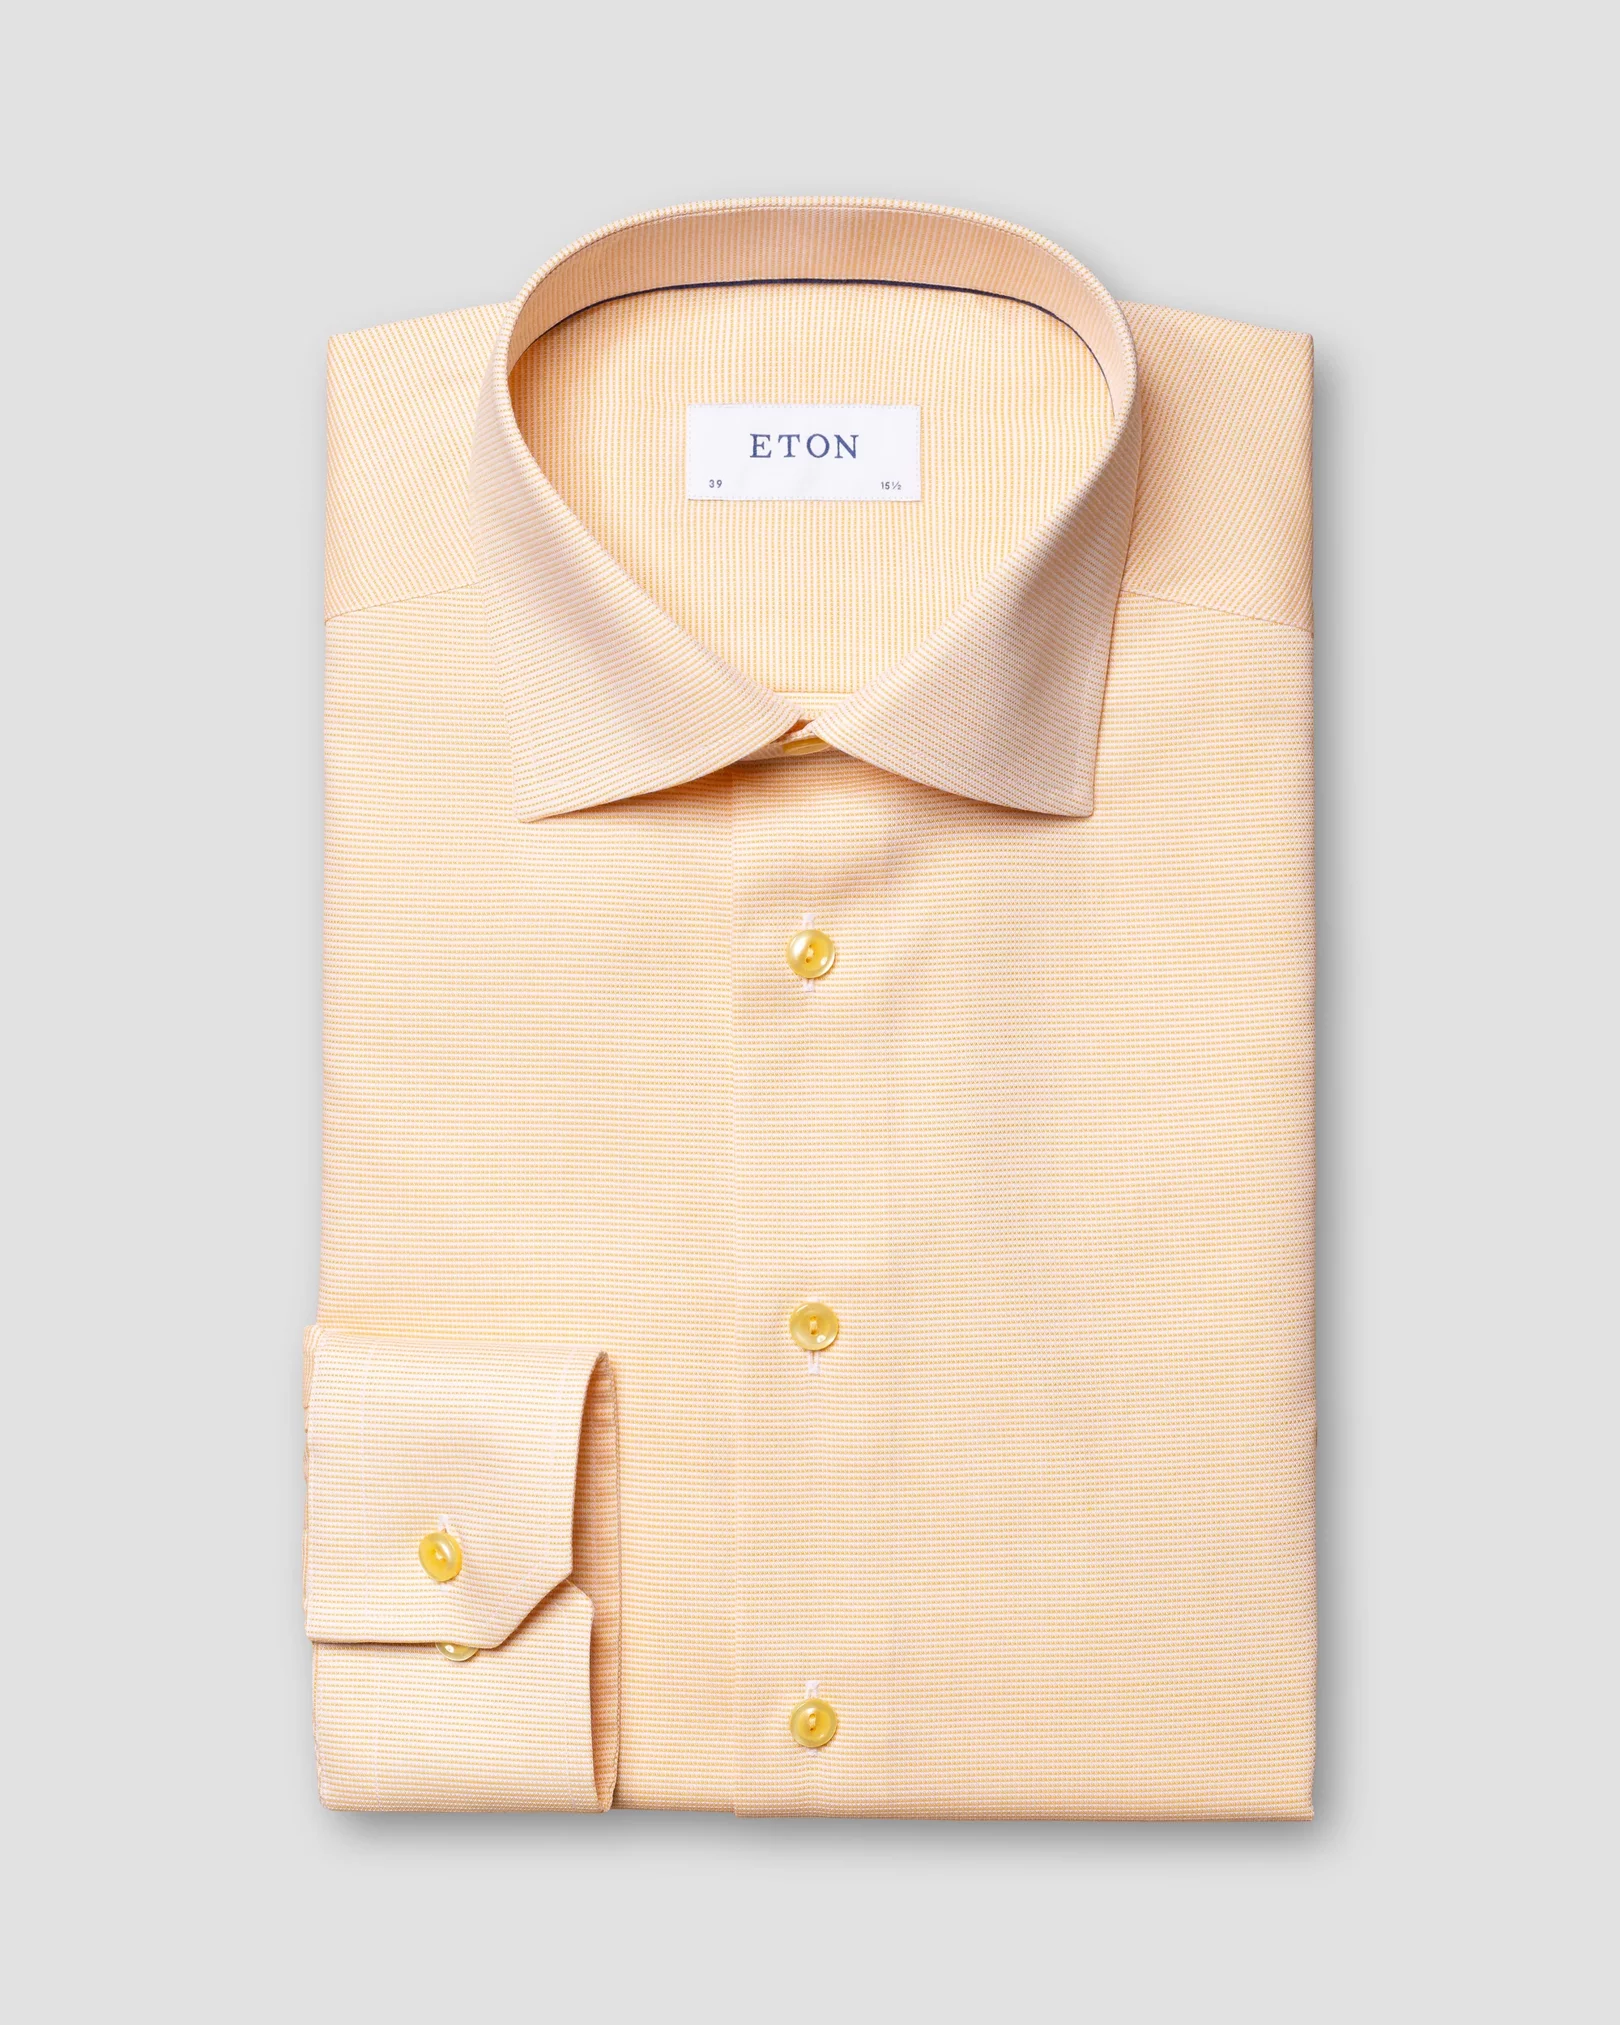 Eton - light yellow twill shirt